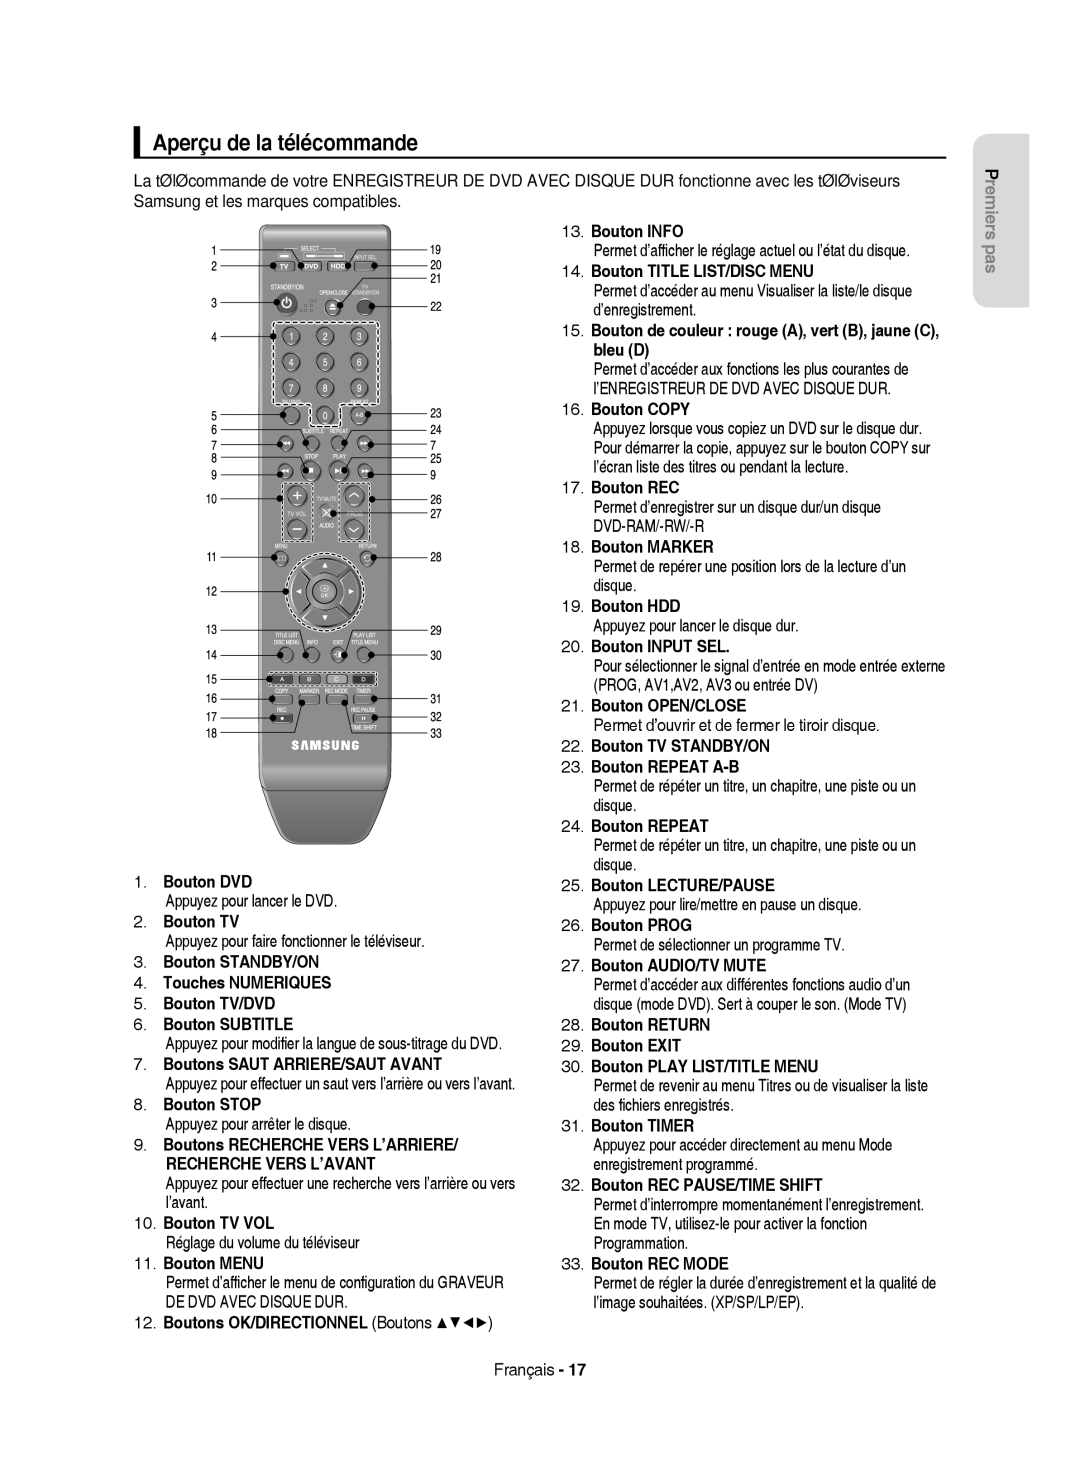 Samsung DVD-HR750/XEB, DVD-HR750/XEG, DVD-HR750/AUS manual Aperçu de la télécommande 